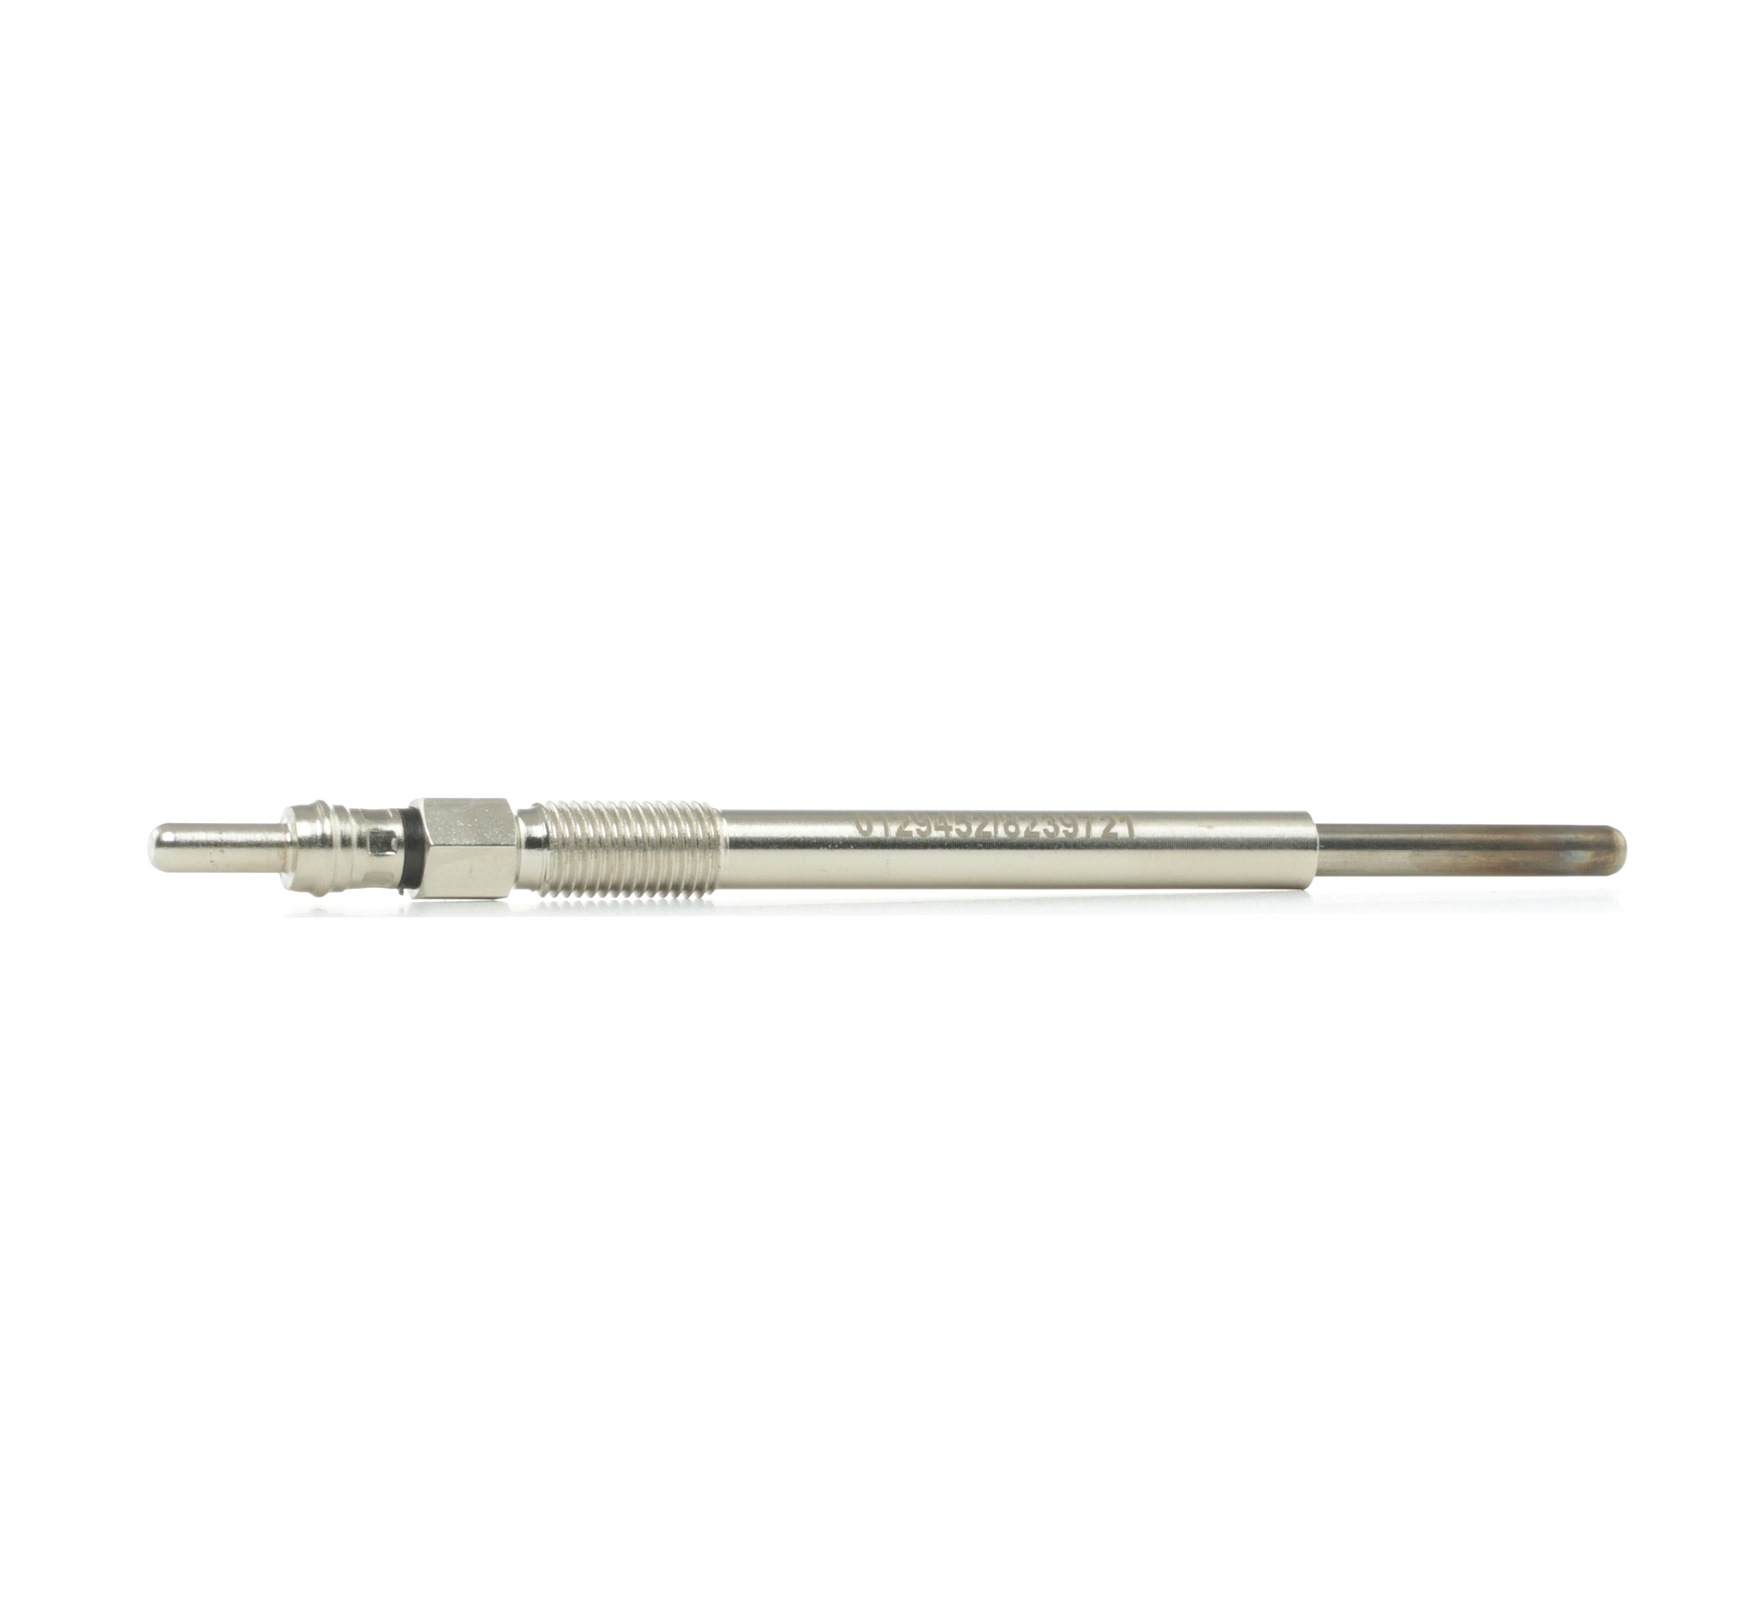 STARK 11V M 8 x 1,0, Pencil-type Glow Plug, after-glow capable, Length: 125 mm, 8 Nm, 123 Glow plugs SKGP-1890163 buy